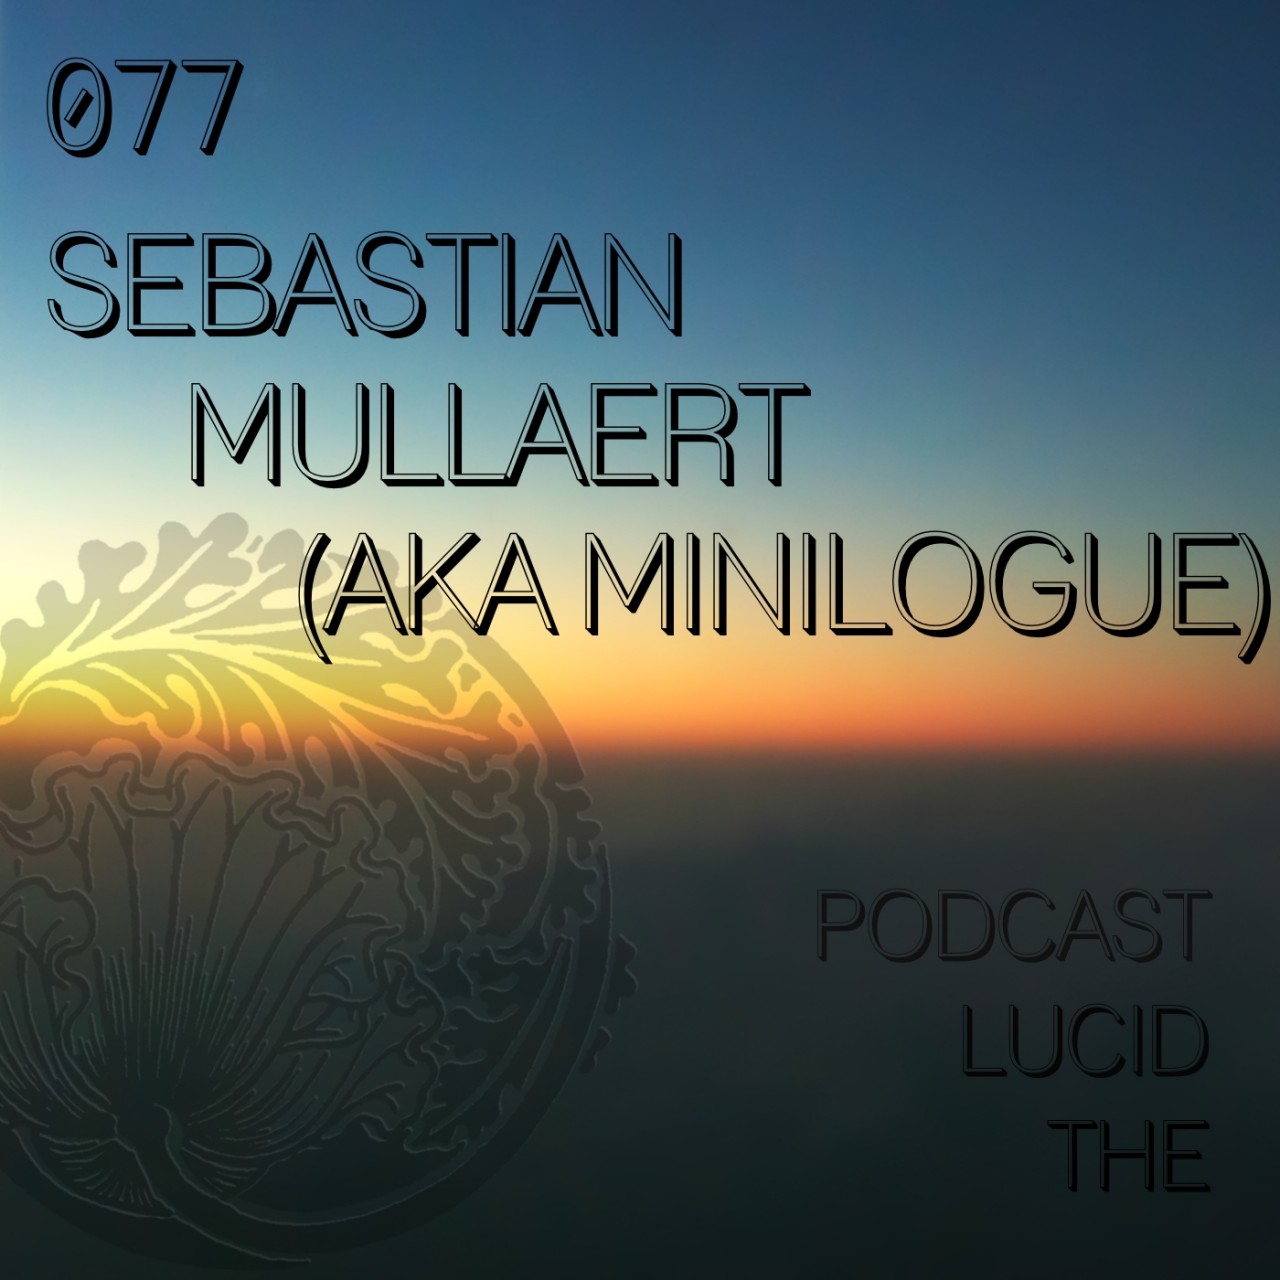 The Lucid Podcast 077 Sebastian Mullaert (aka Minilogue)